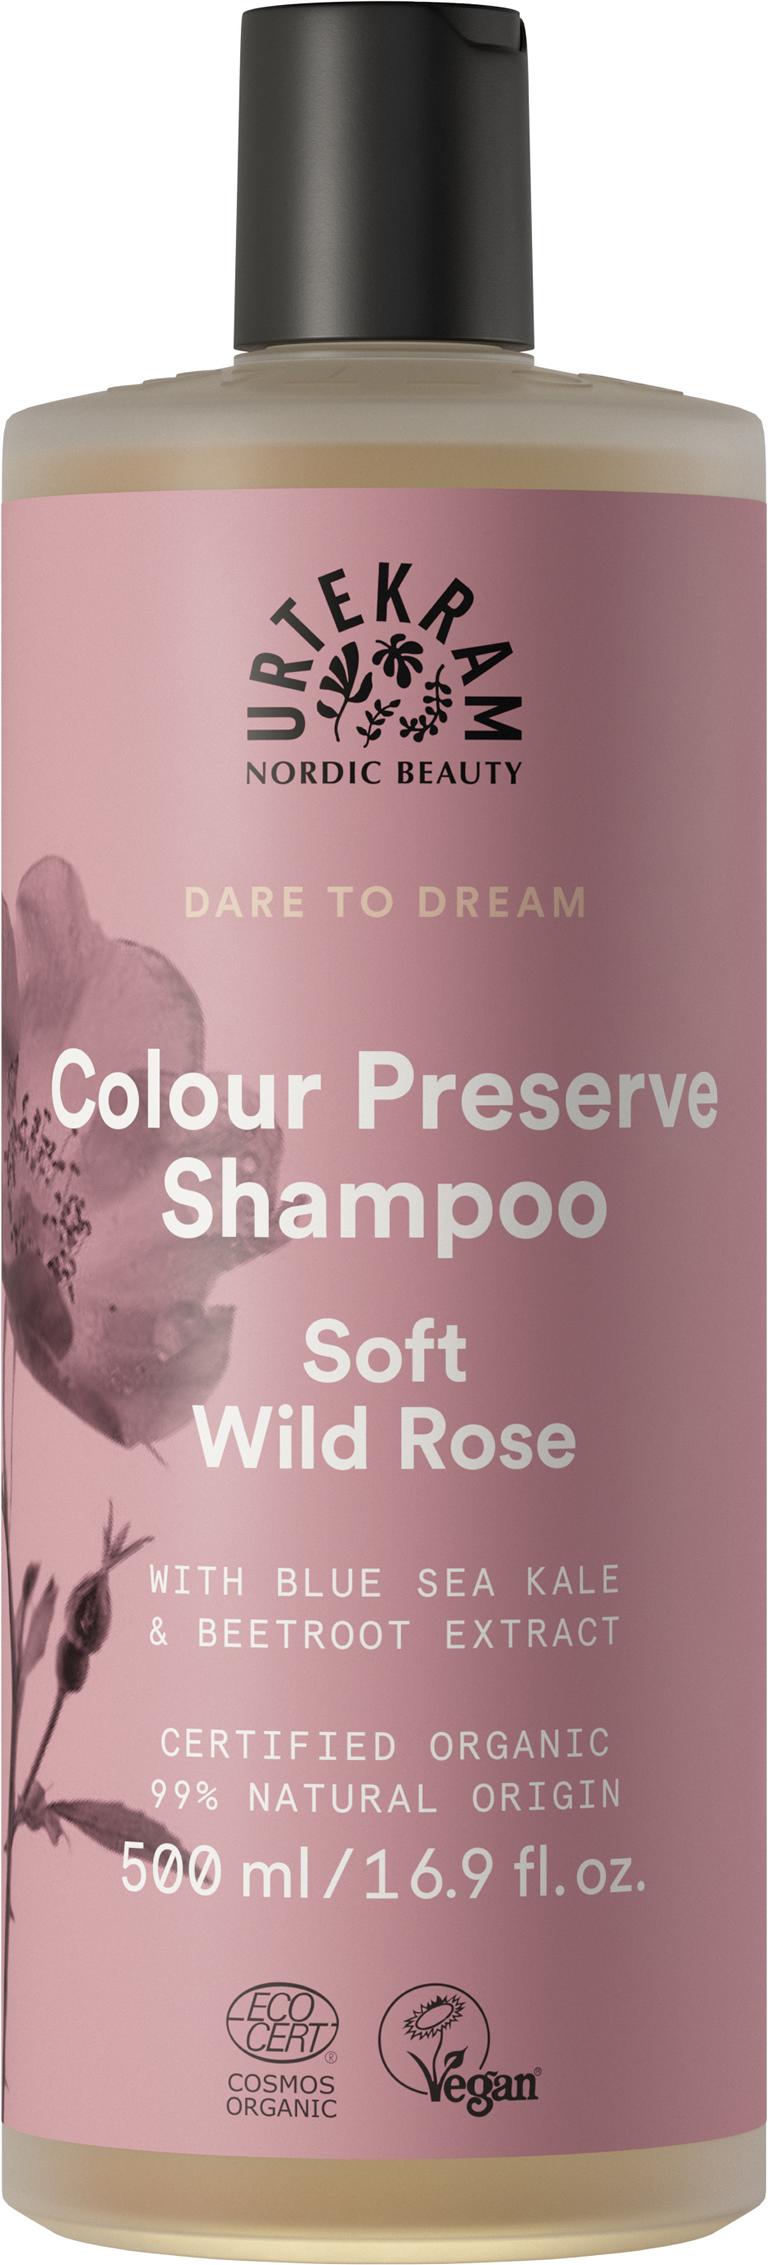 Urtekram Soft Wild Rose Shampoo 500ml